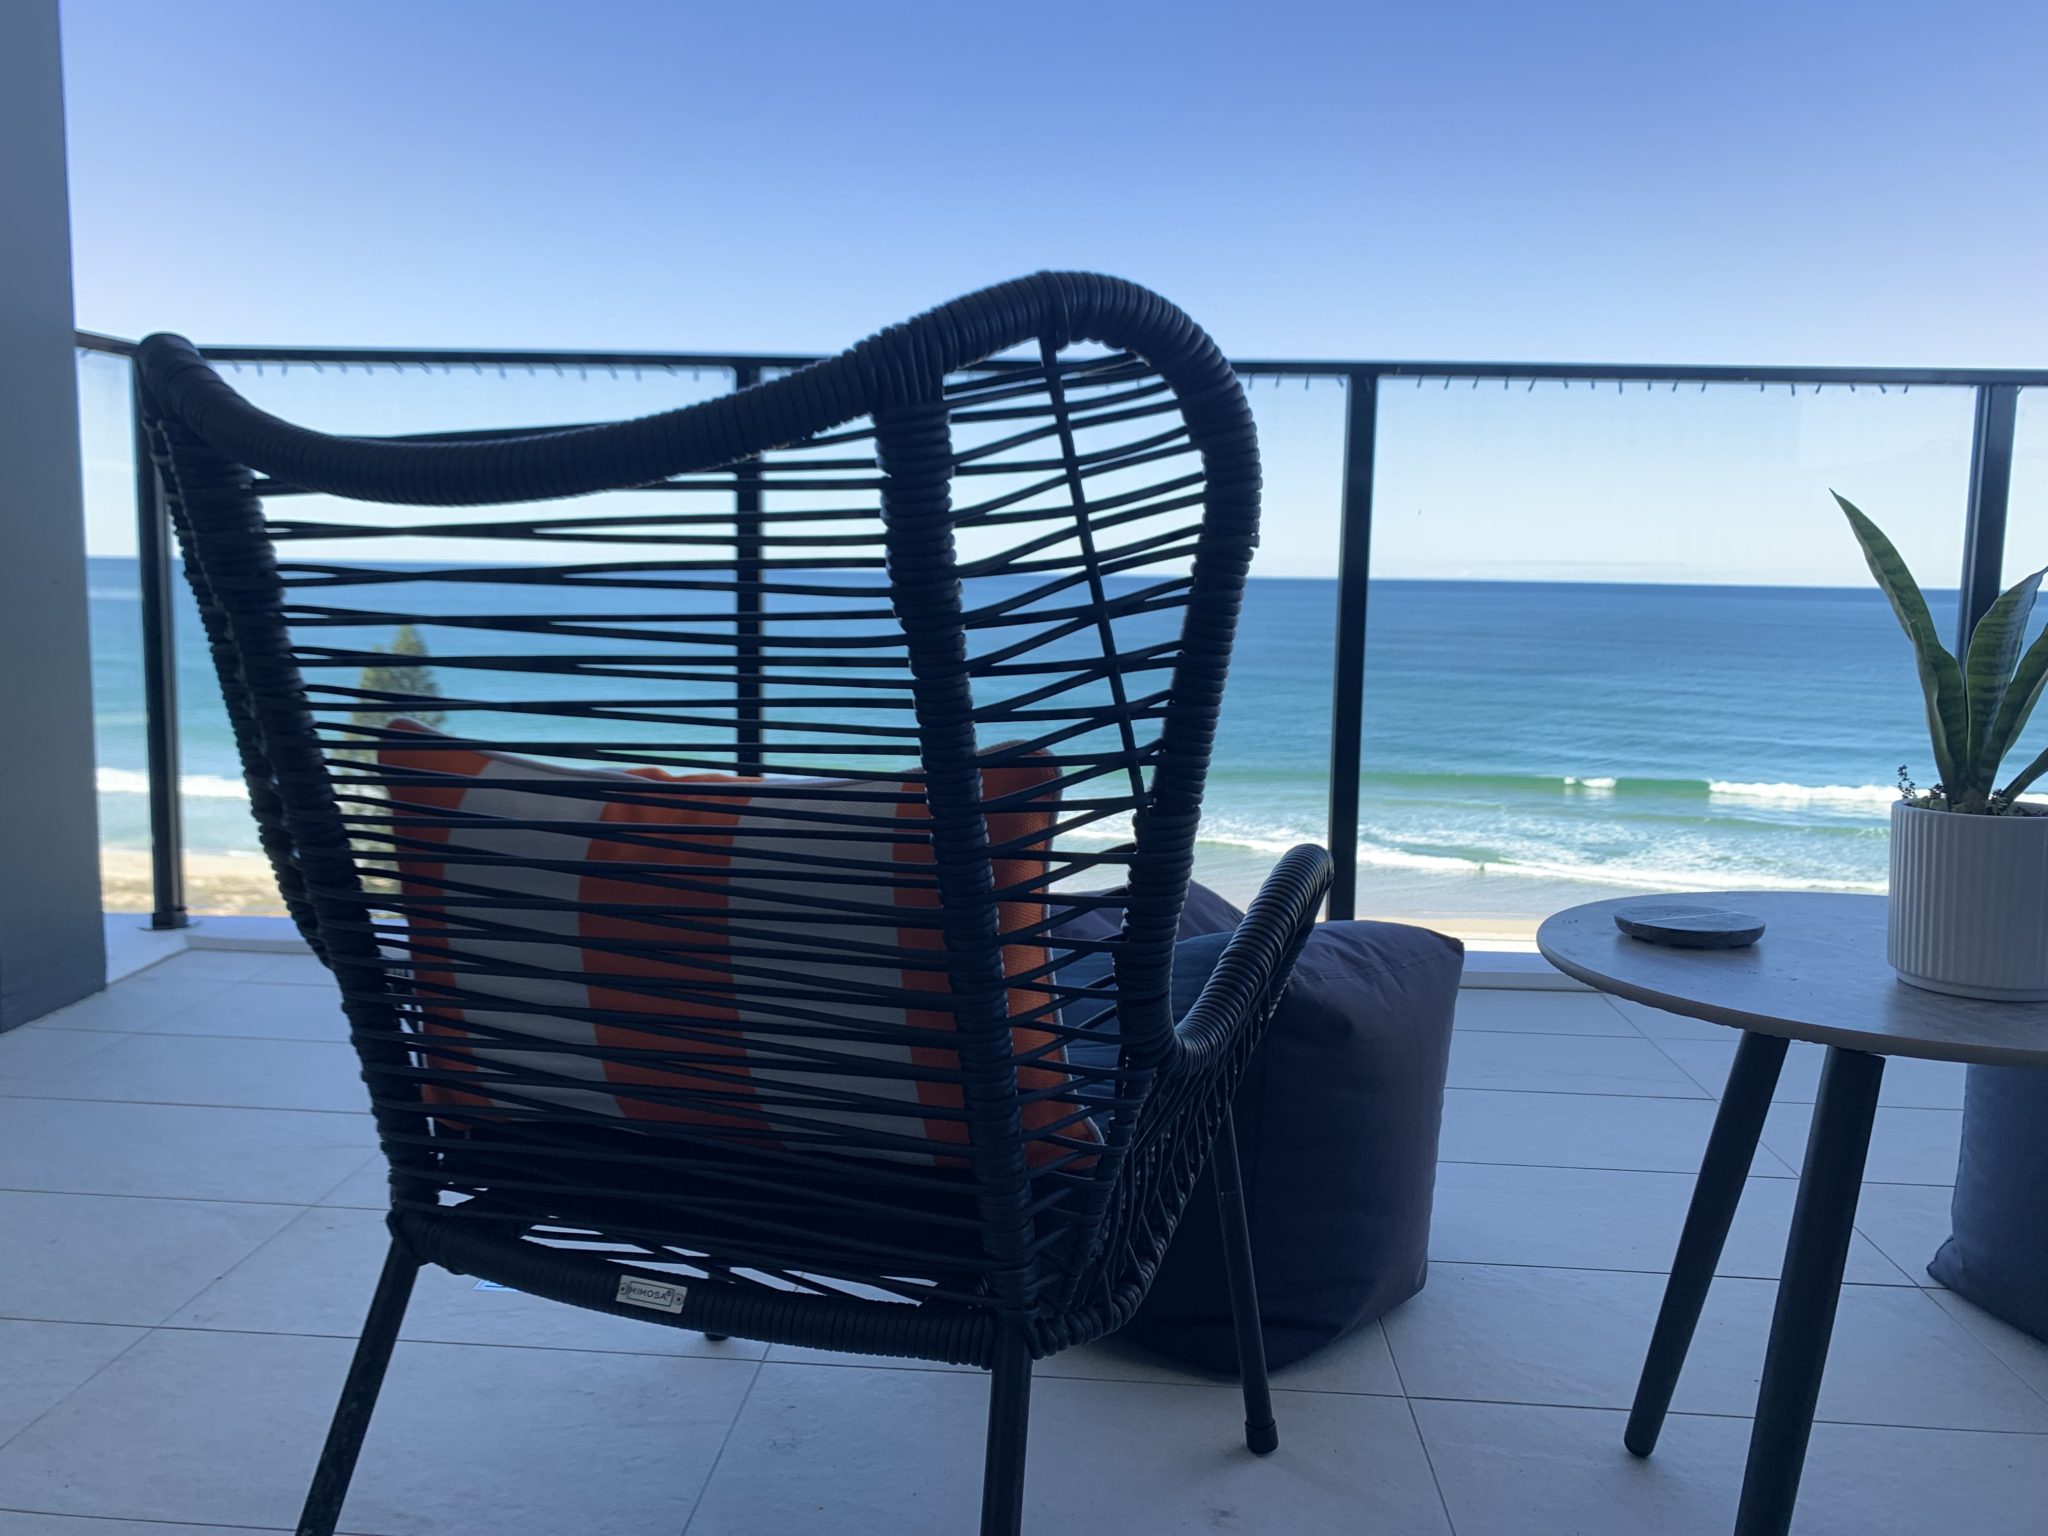 Luxury Apartment with Beach Views